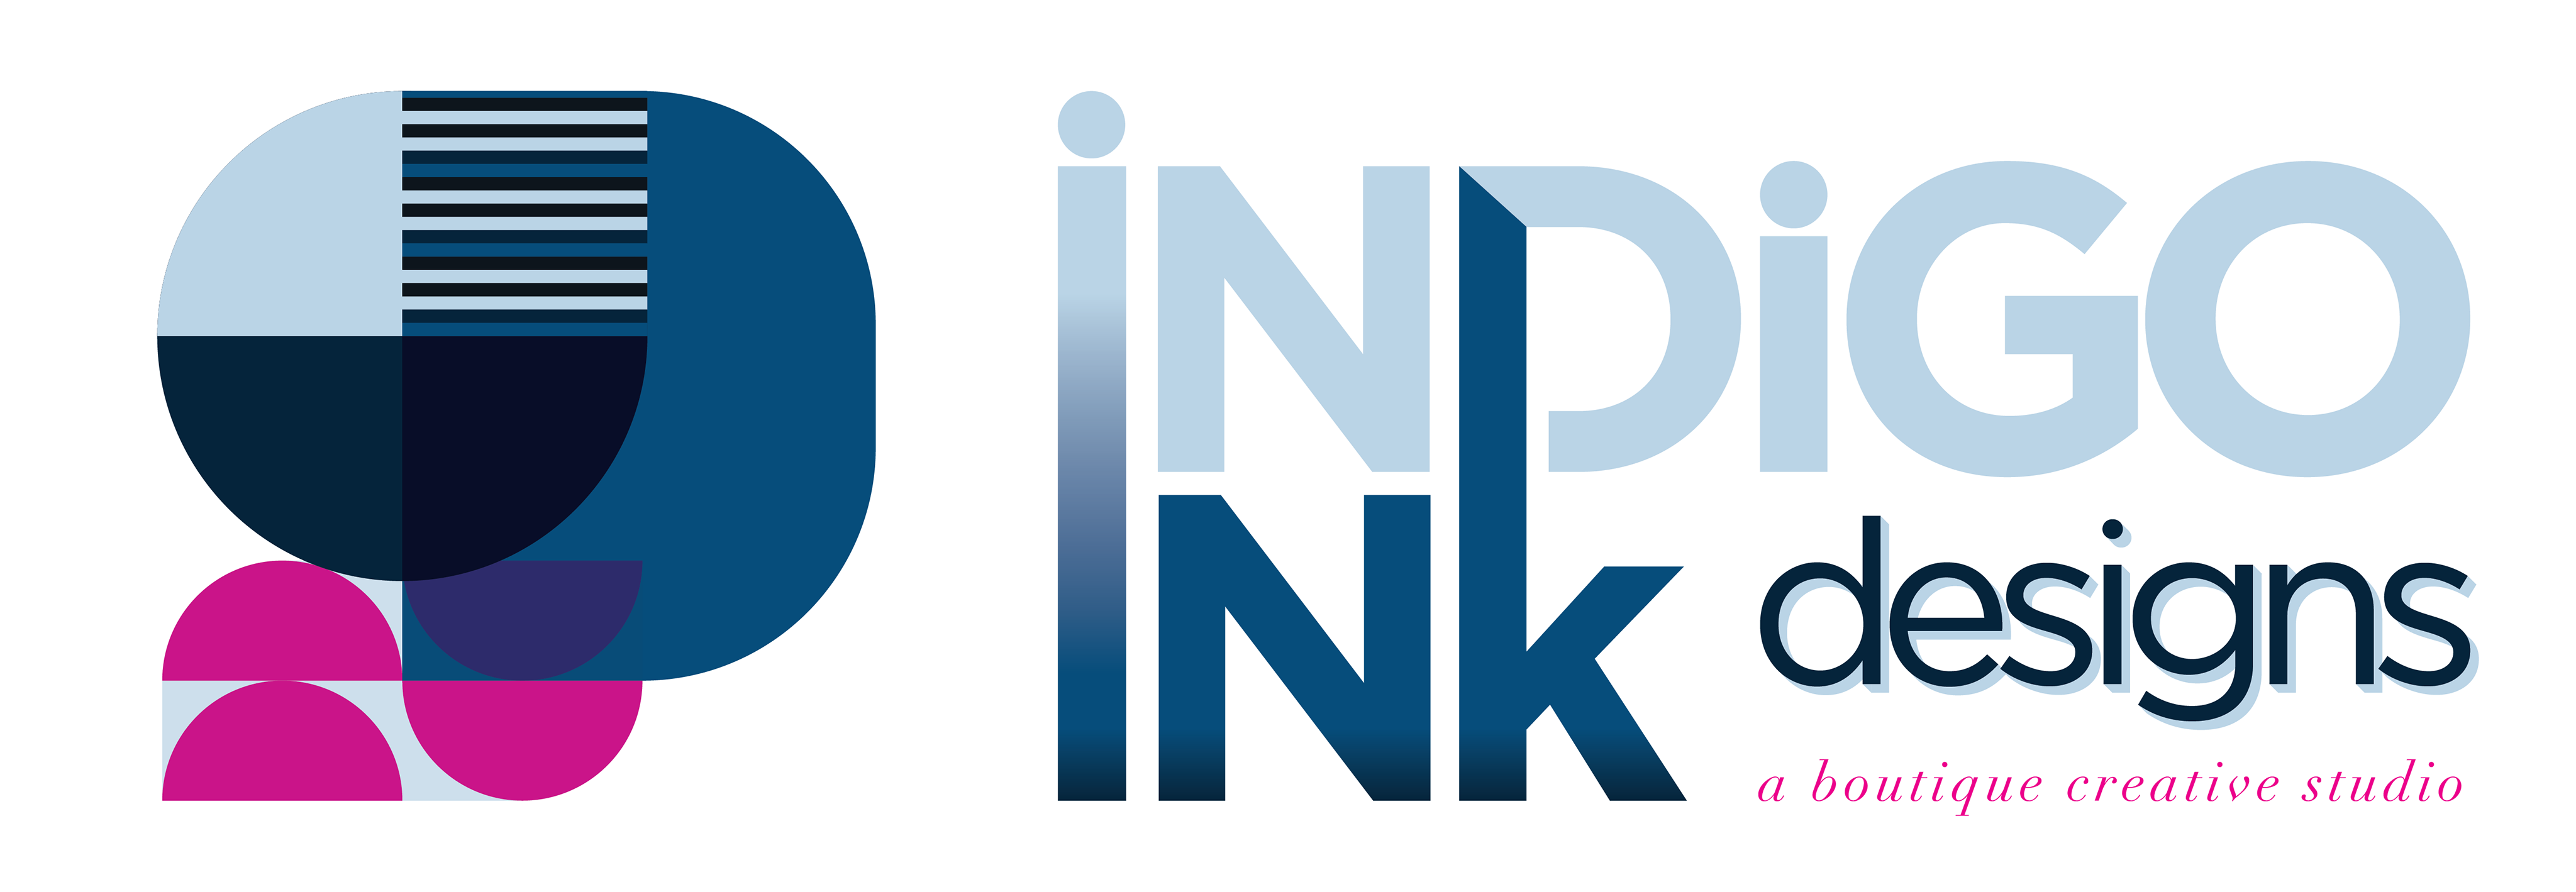 Indigo Ink Designs